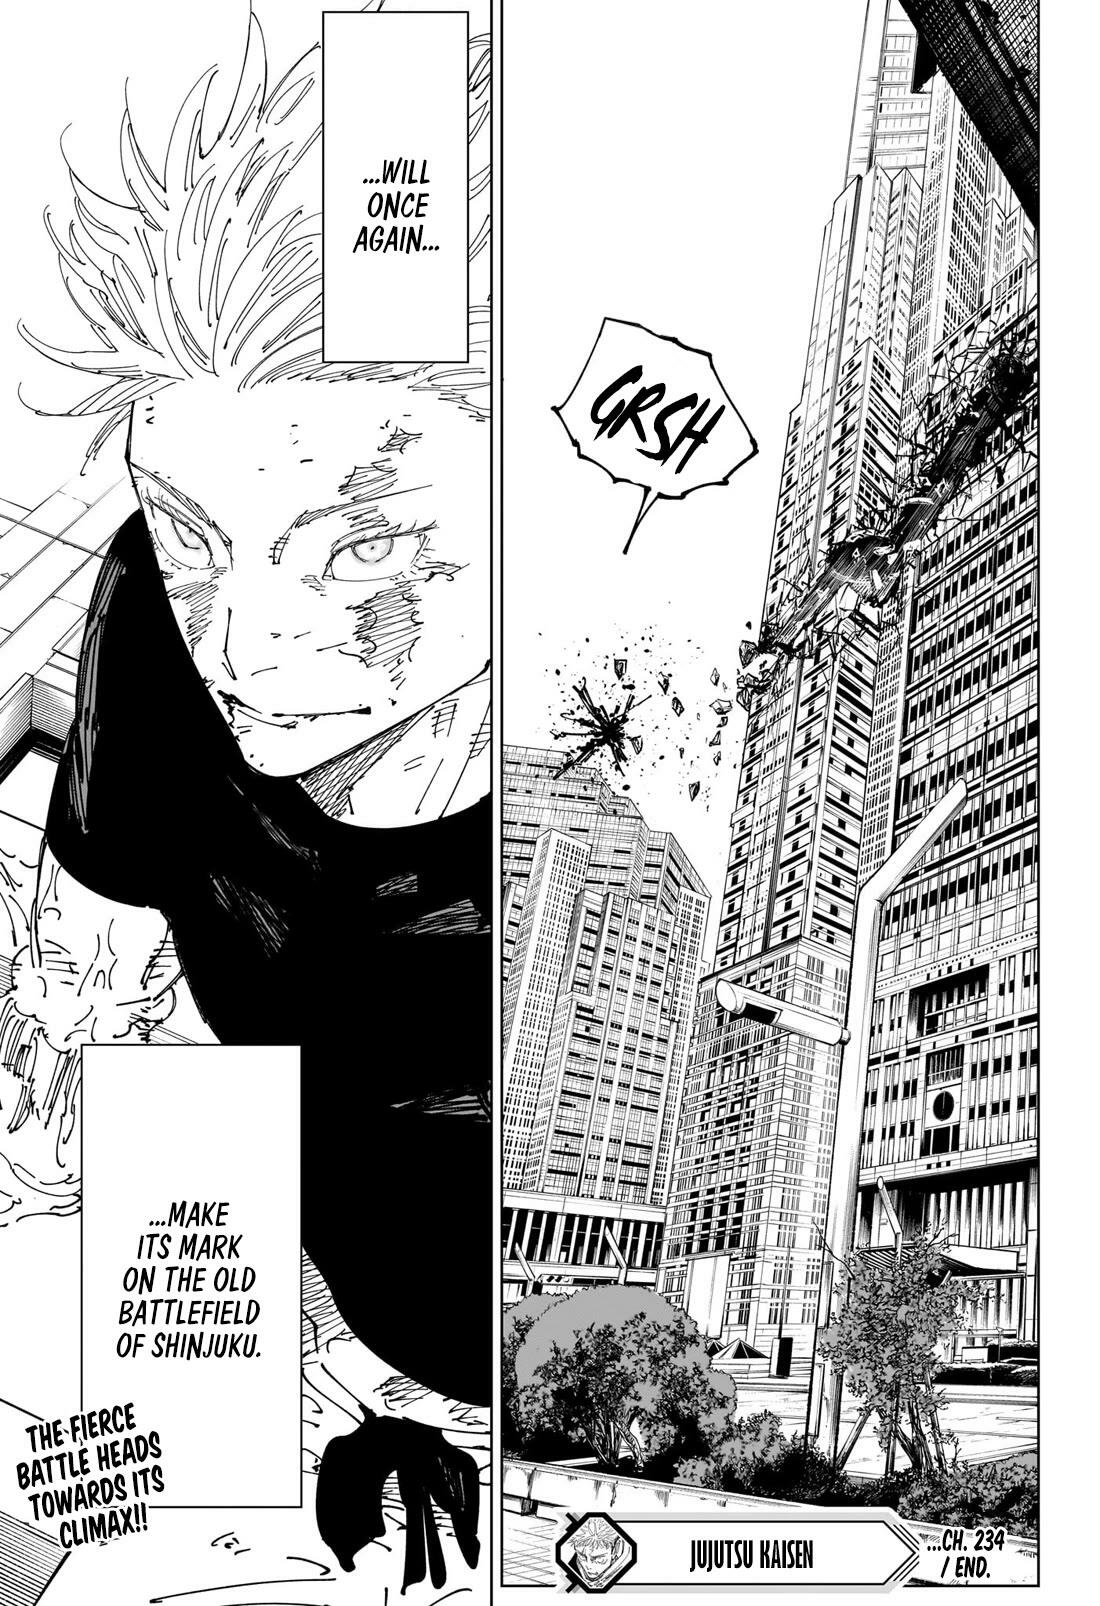 Jujutsu Kaisen Chapter 234: The Decisive Battle In The Uninhabited, Demon-Infested Shinjuku ⑫ page 19 - Mangakakalot